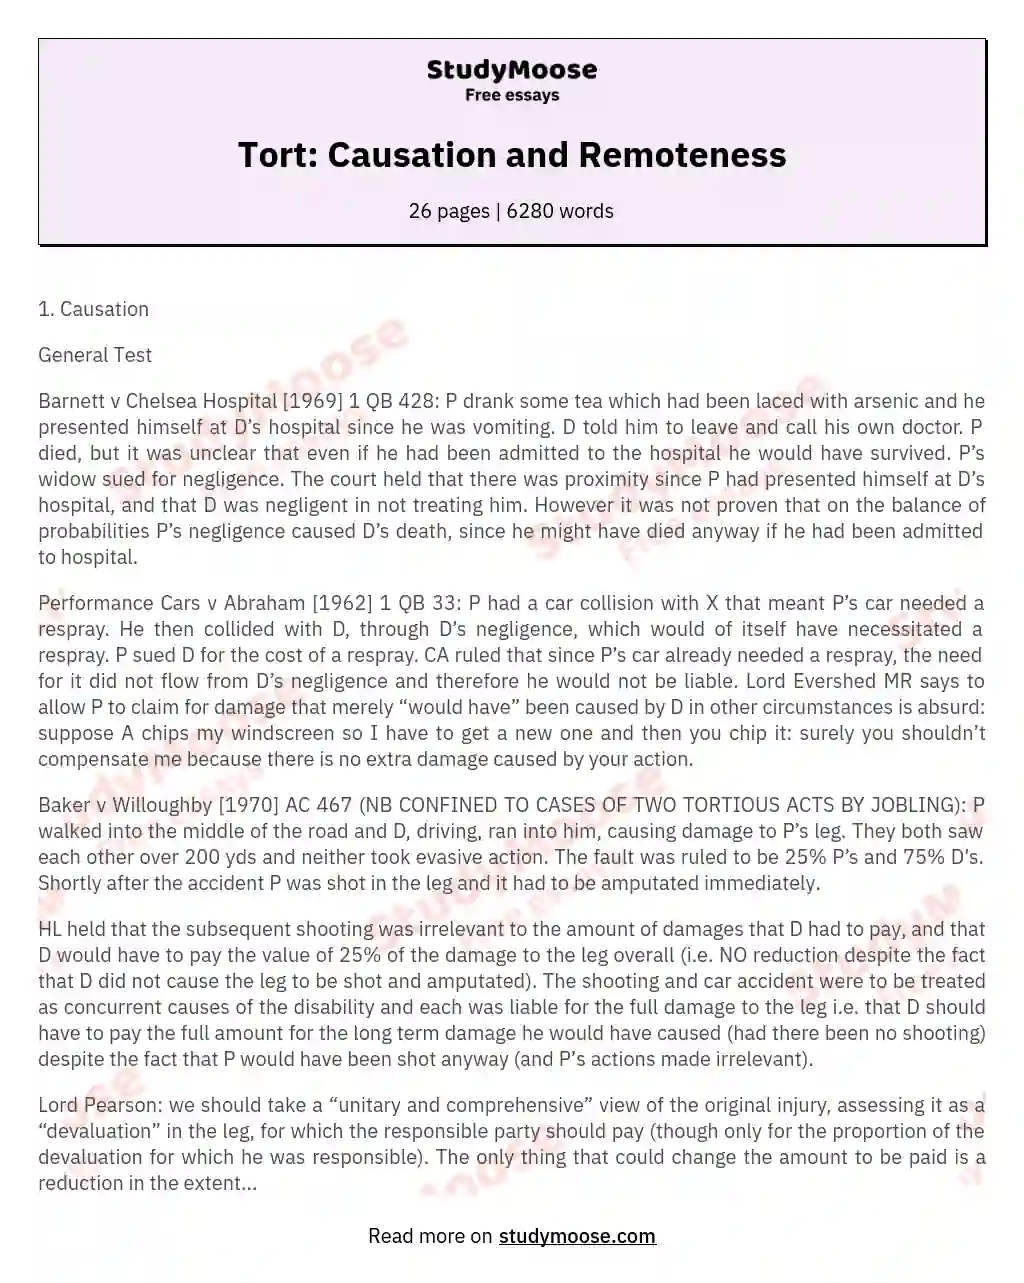 Tort: Causation and Remoteness essay